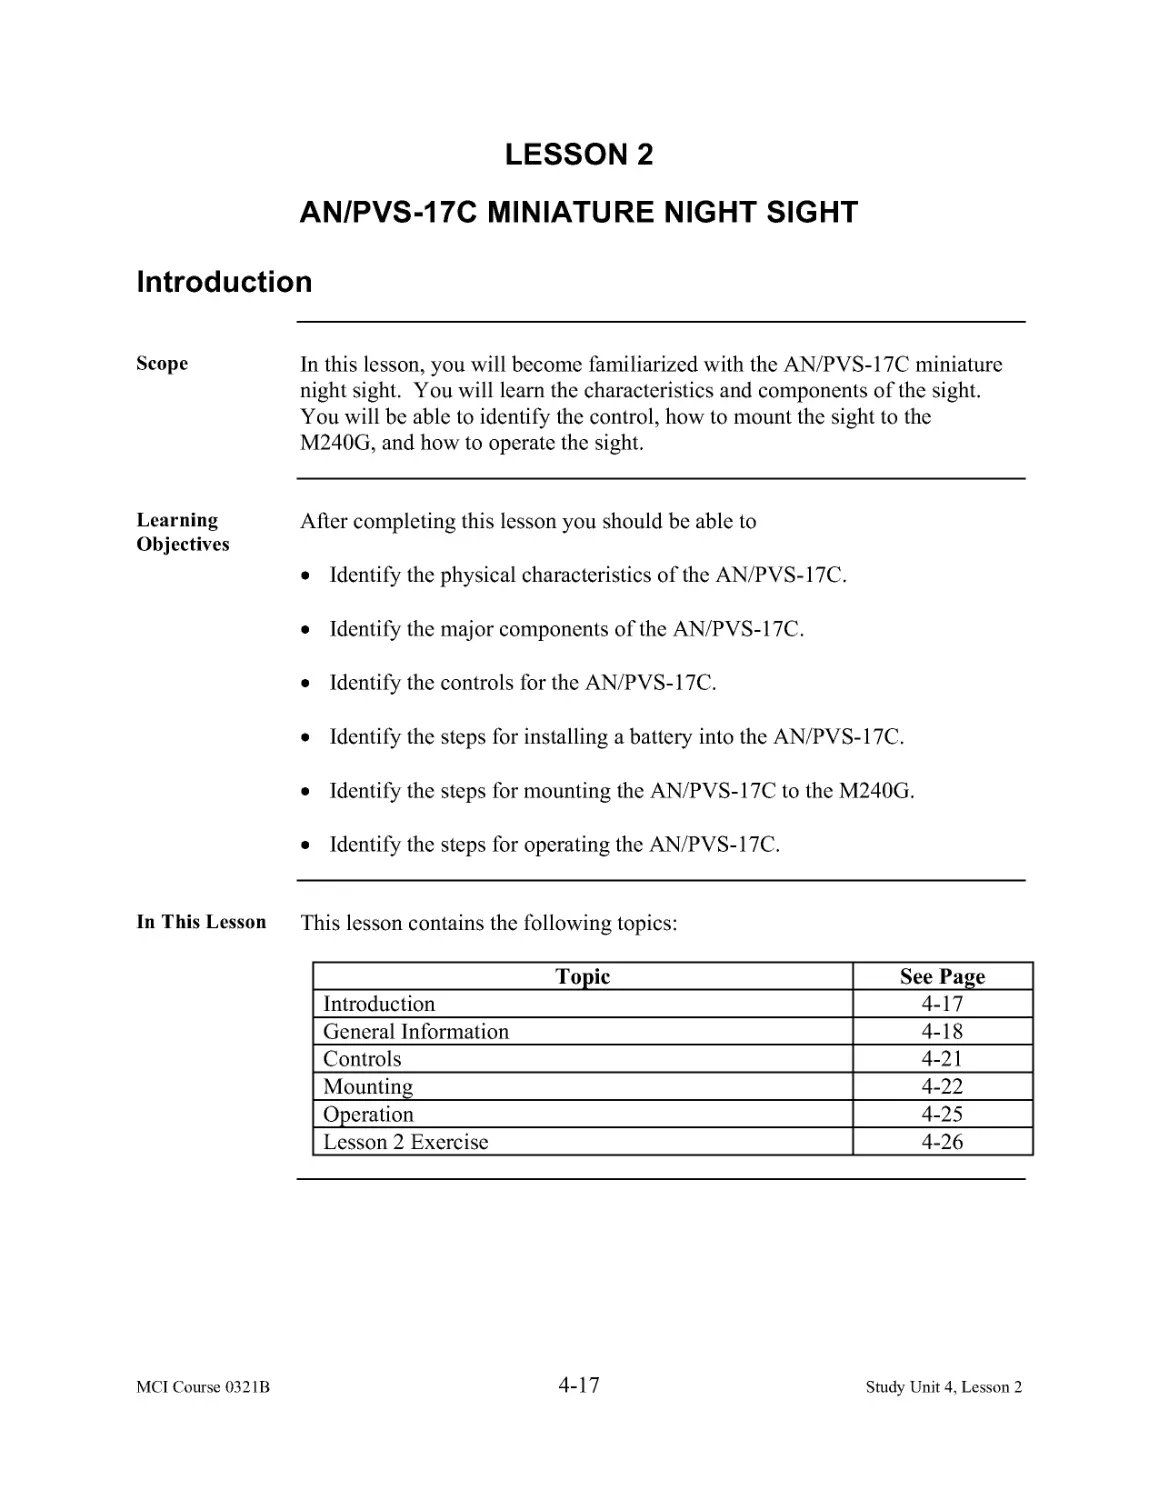 Lesson 2:  AN/PVS-17C Miniature Night Sight